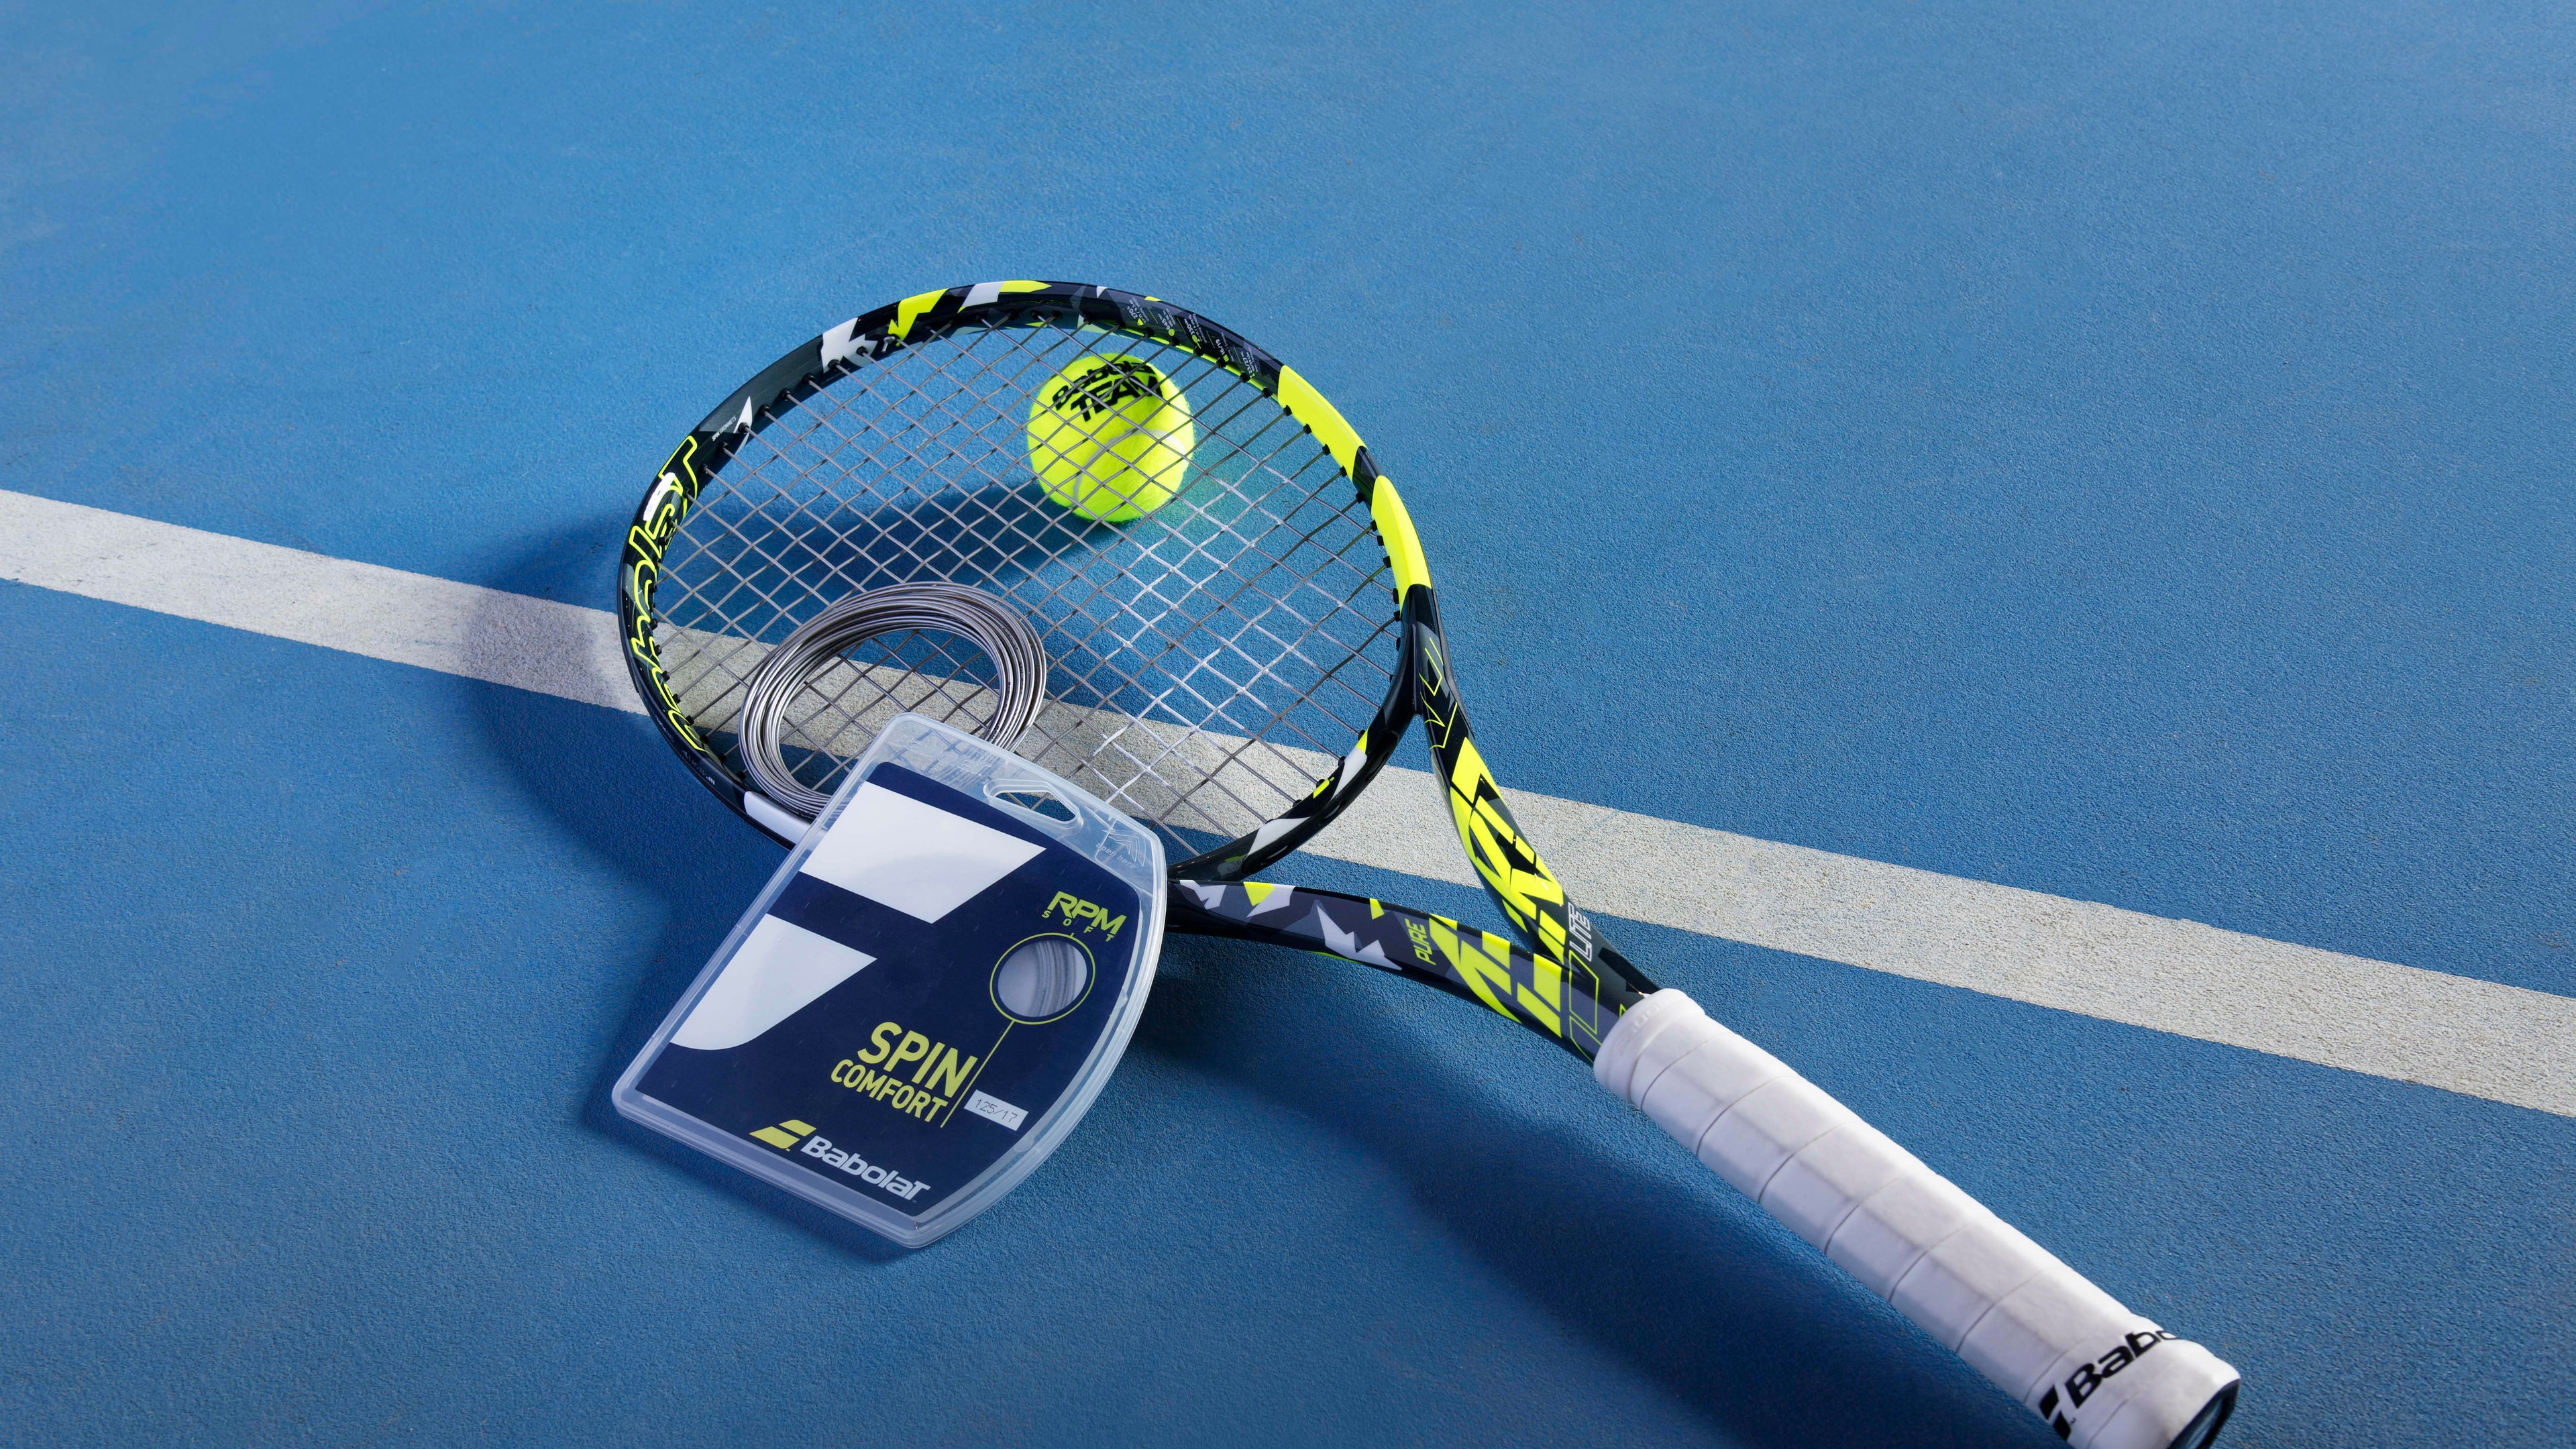 Babolat Tennis Equipment on the court - Racquet Point